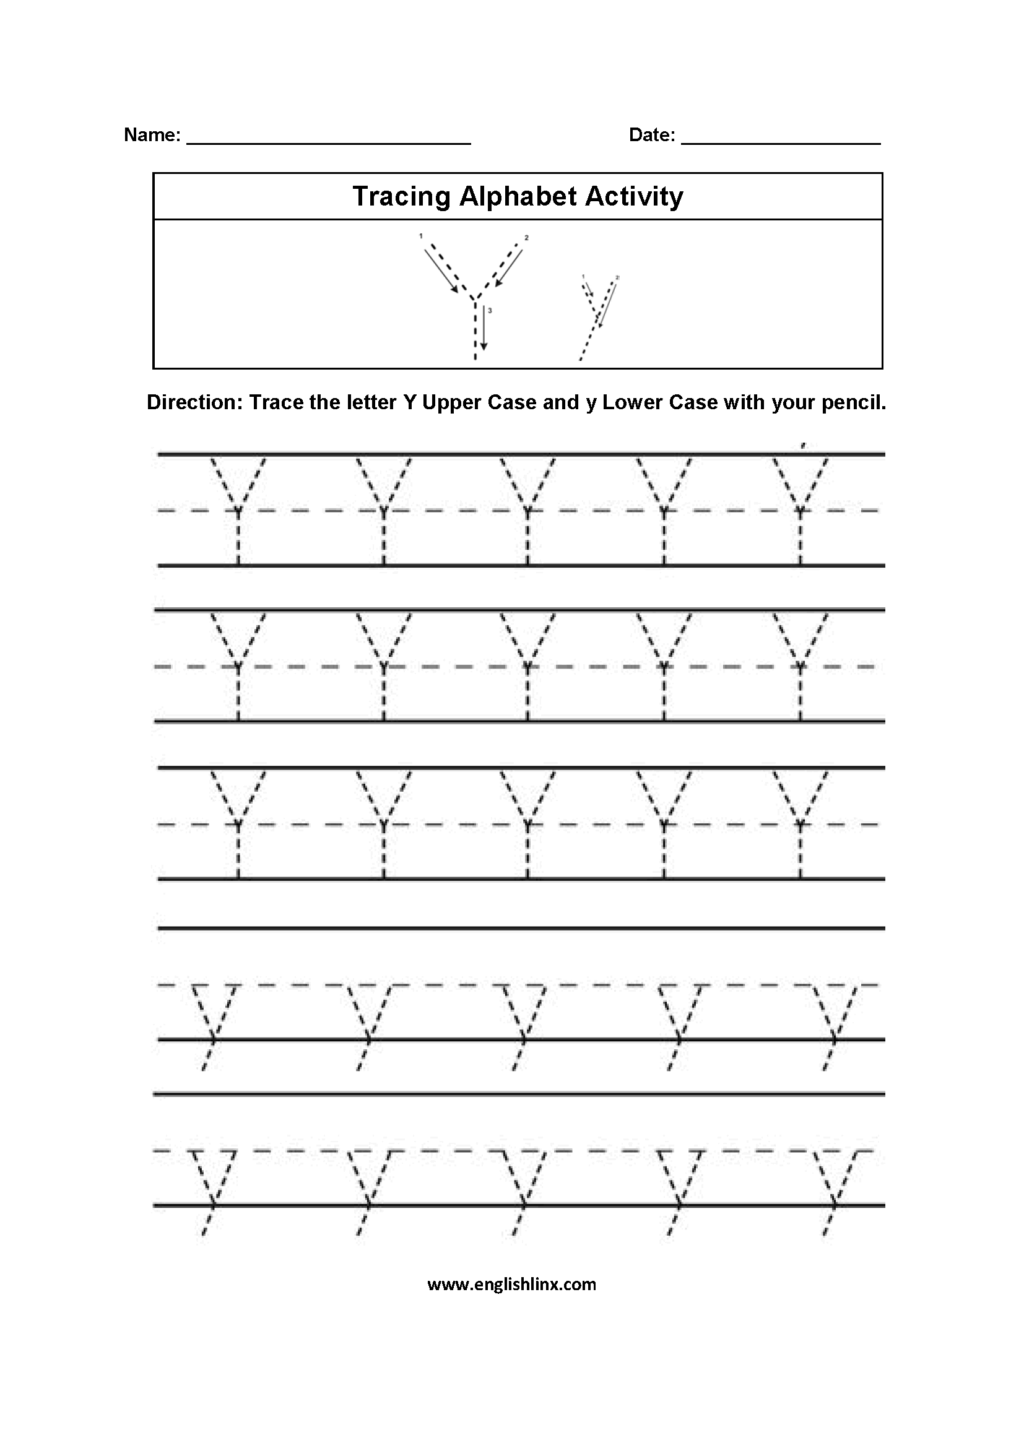 Worksheet ~ Outstanding Dottedet Worksheets Picture Ideas inside Y Letter Tracing